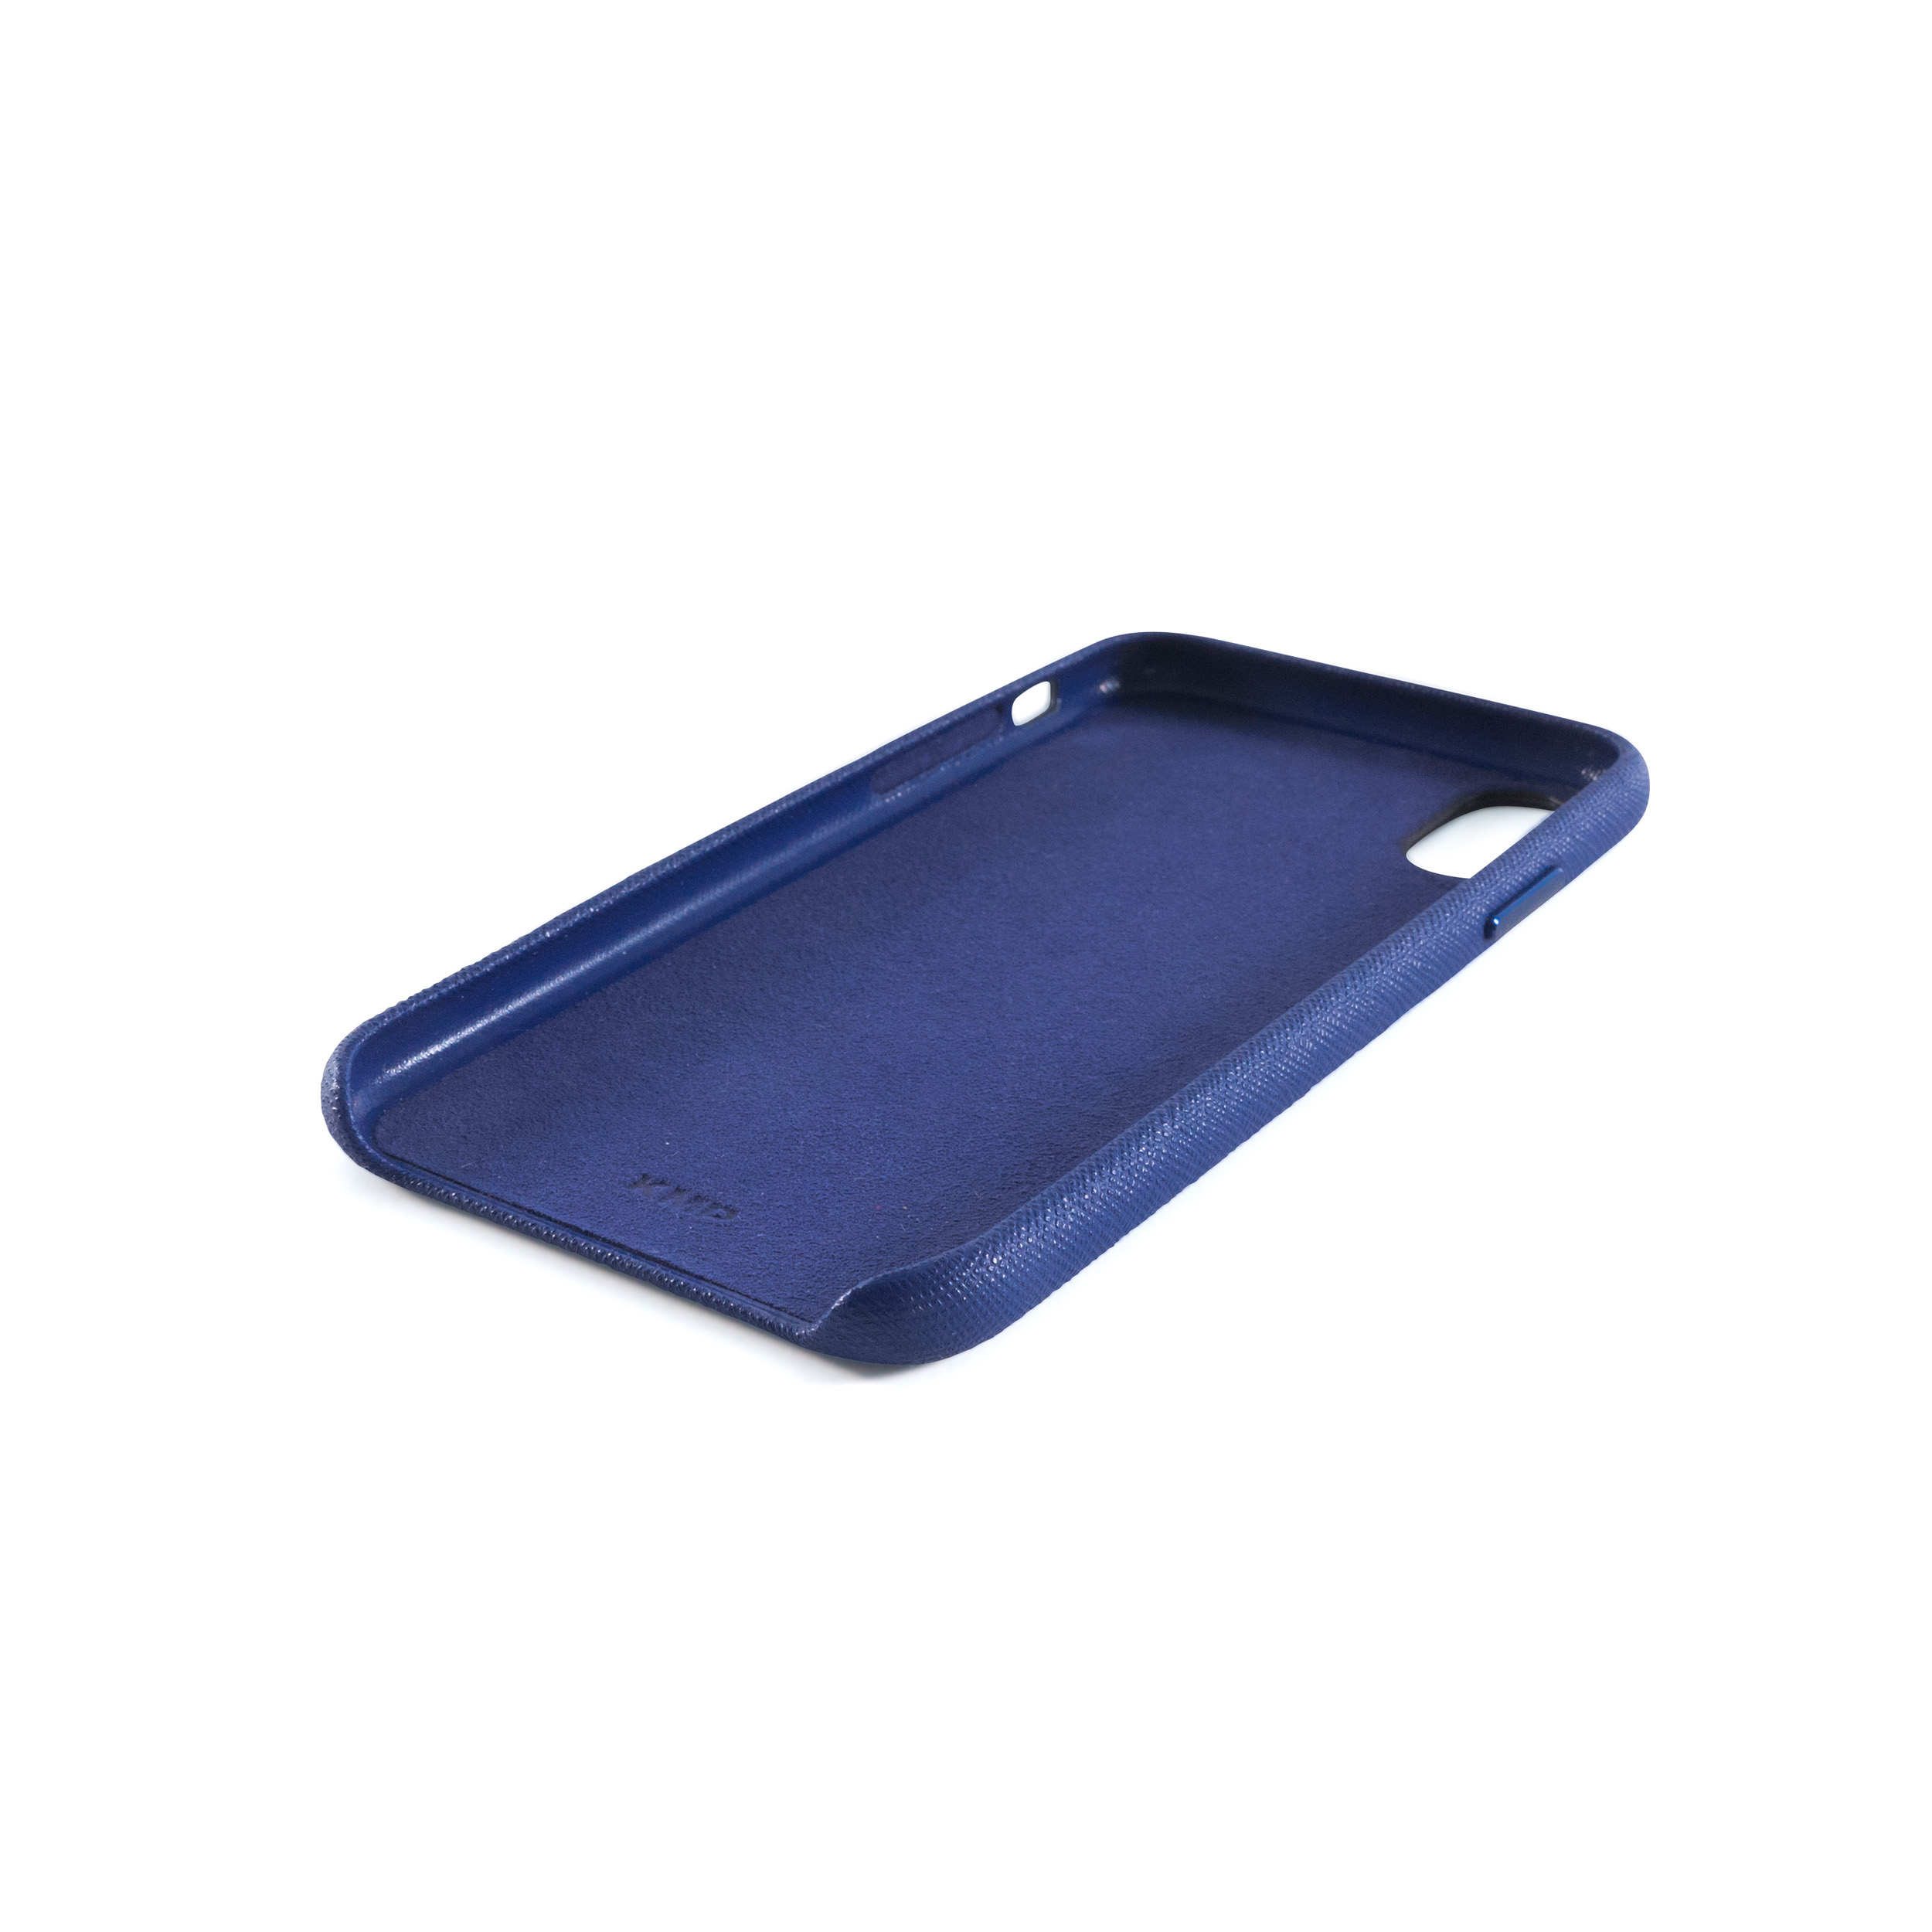 KMP iPhone Sargasso Vegane blue für sargasso Max, Leder Blue, Full Cover, iPhone XS Apple, XS Max Schutzhülle